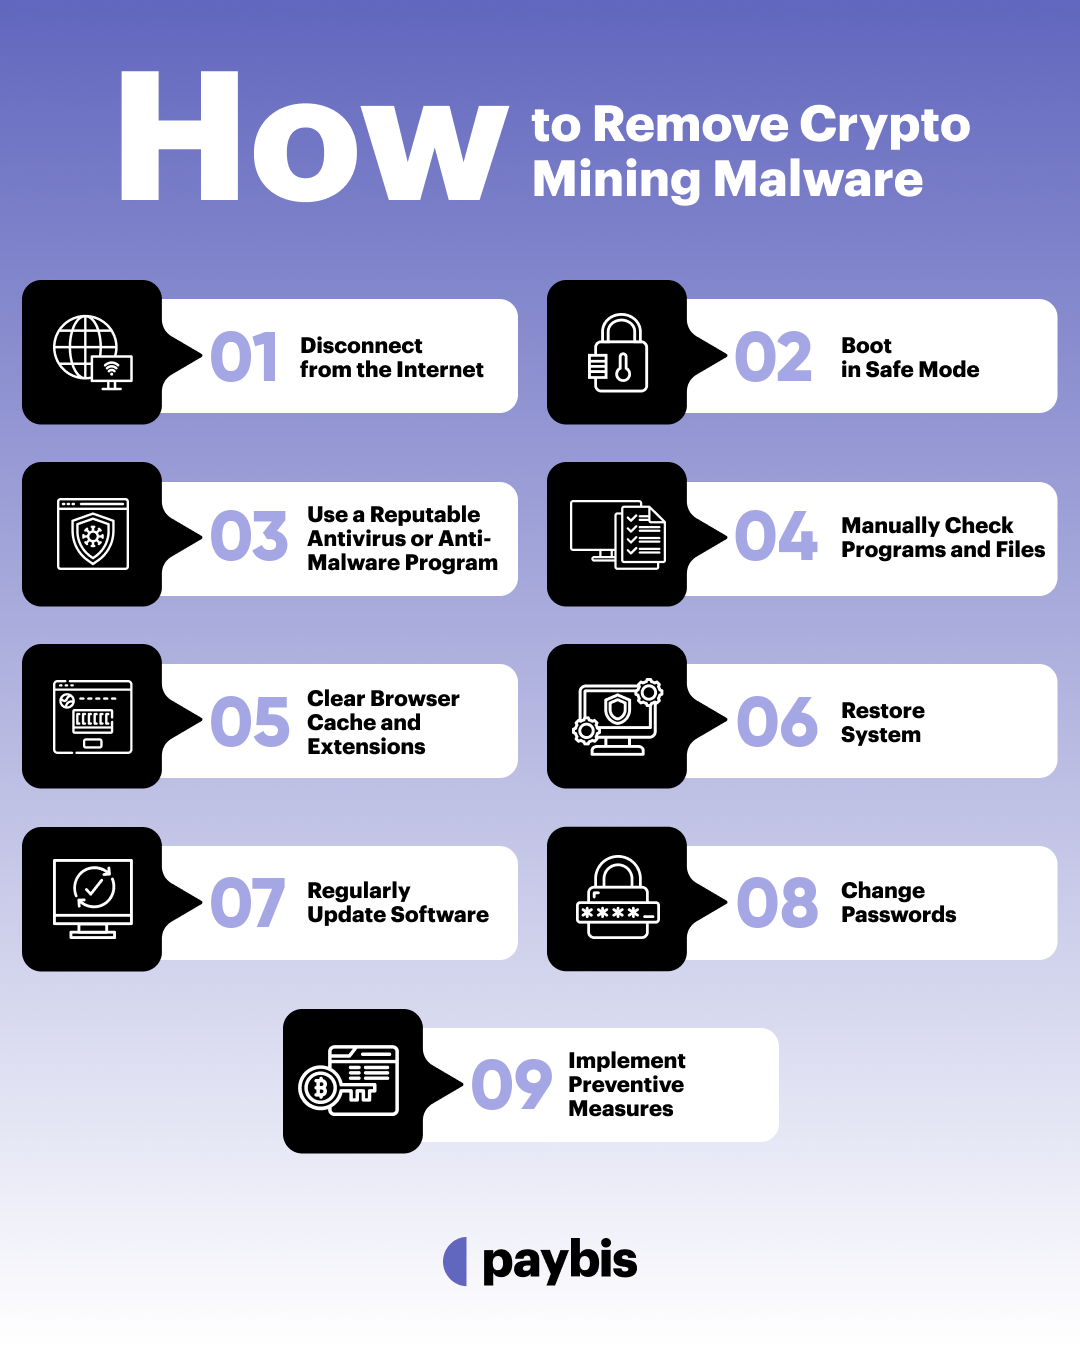 How to Remove Crypto Mining Malware